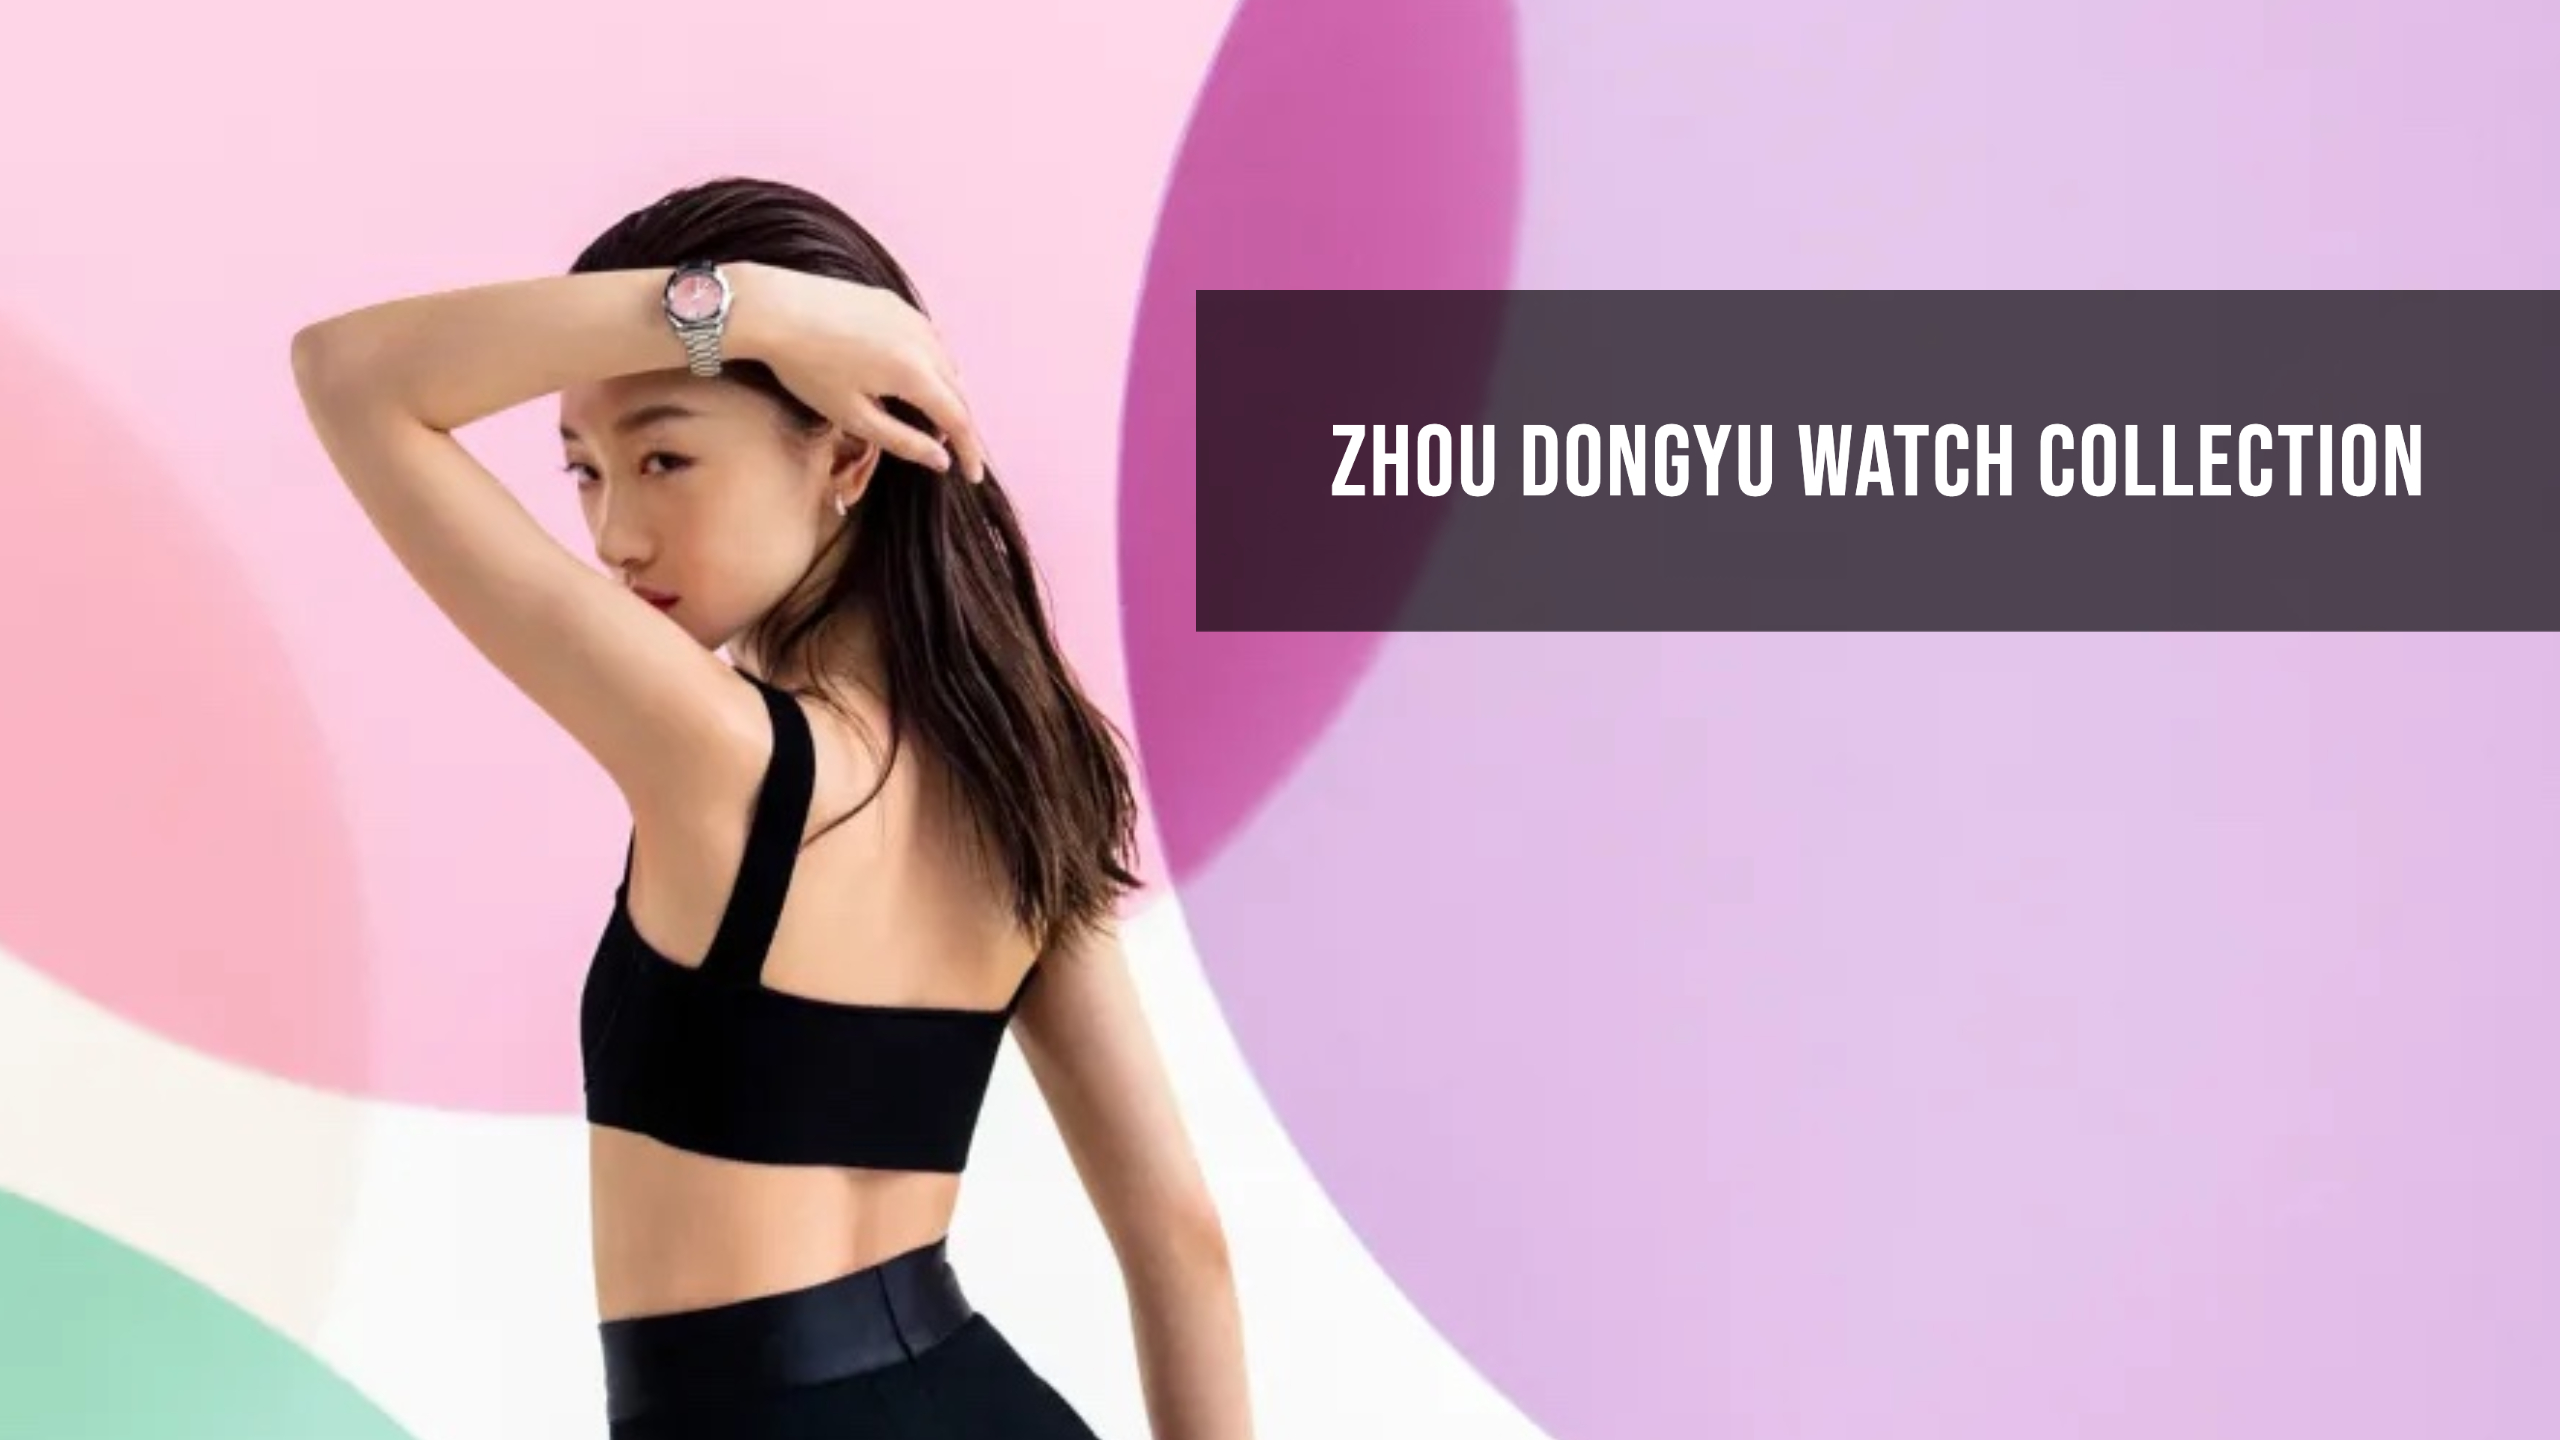 zhou dongyu movies and tv shows